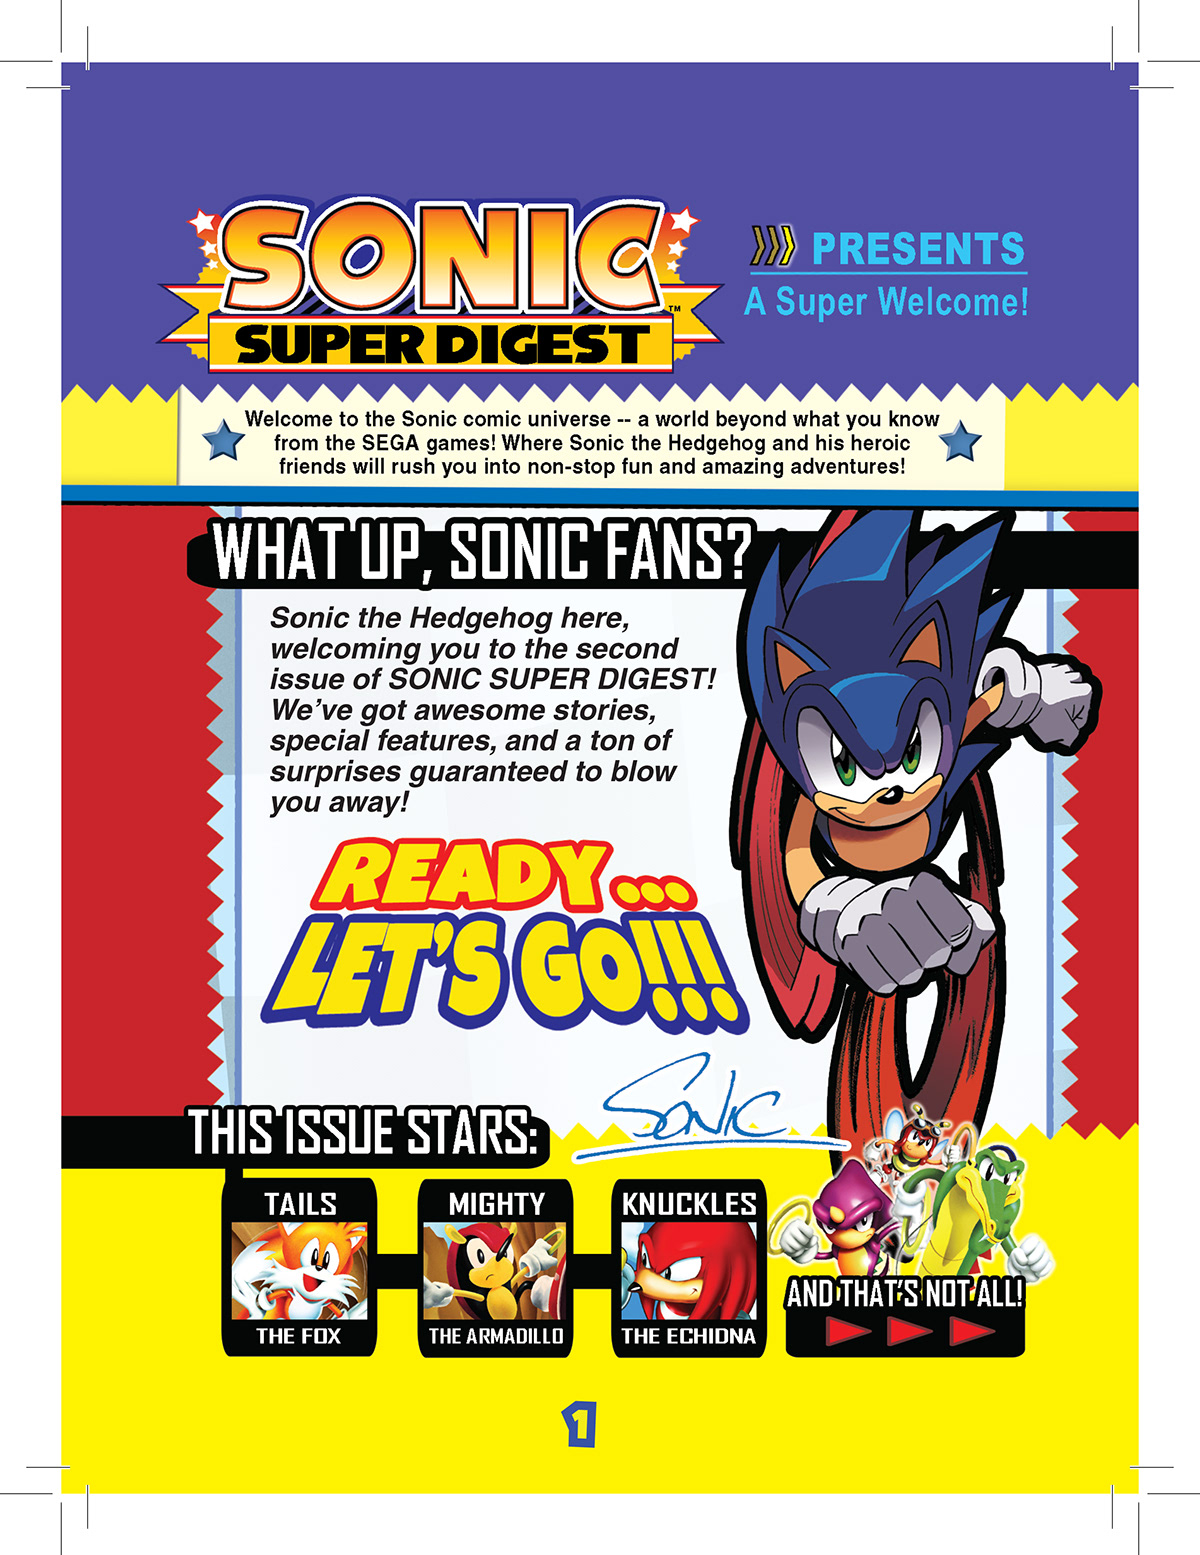 Sonic the Hedgehog SEGA Archie Comics Sonic Universe Sonic Super Digest Sonic Encyclopedia